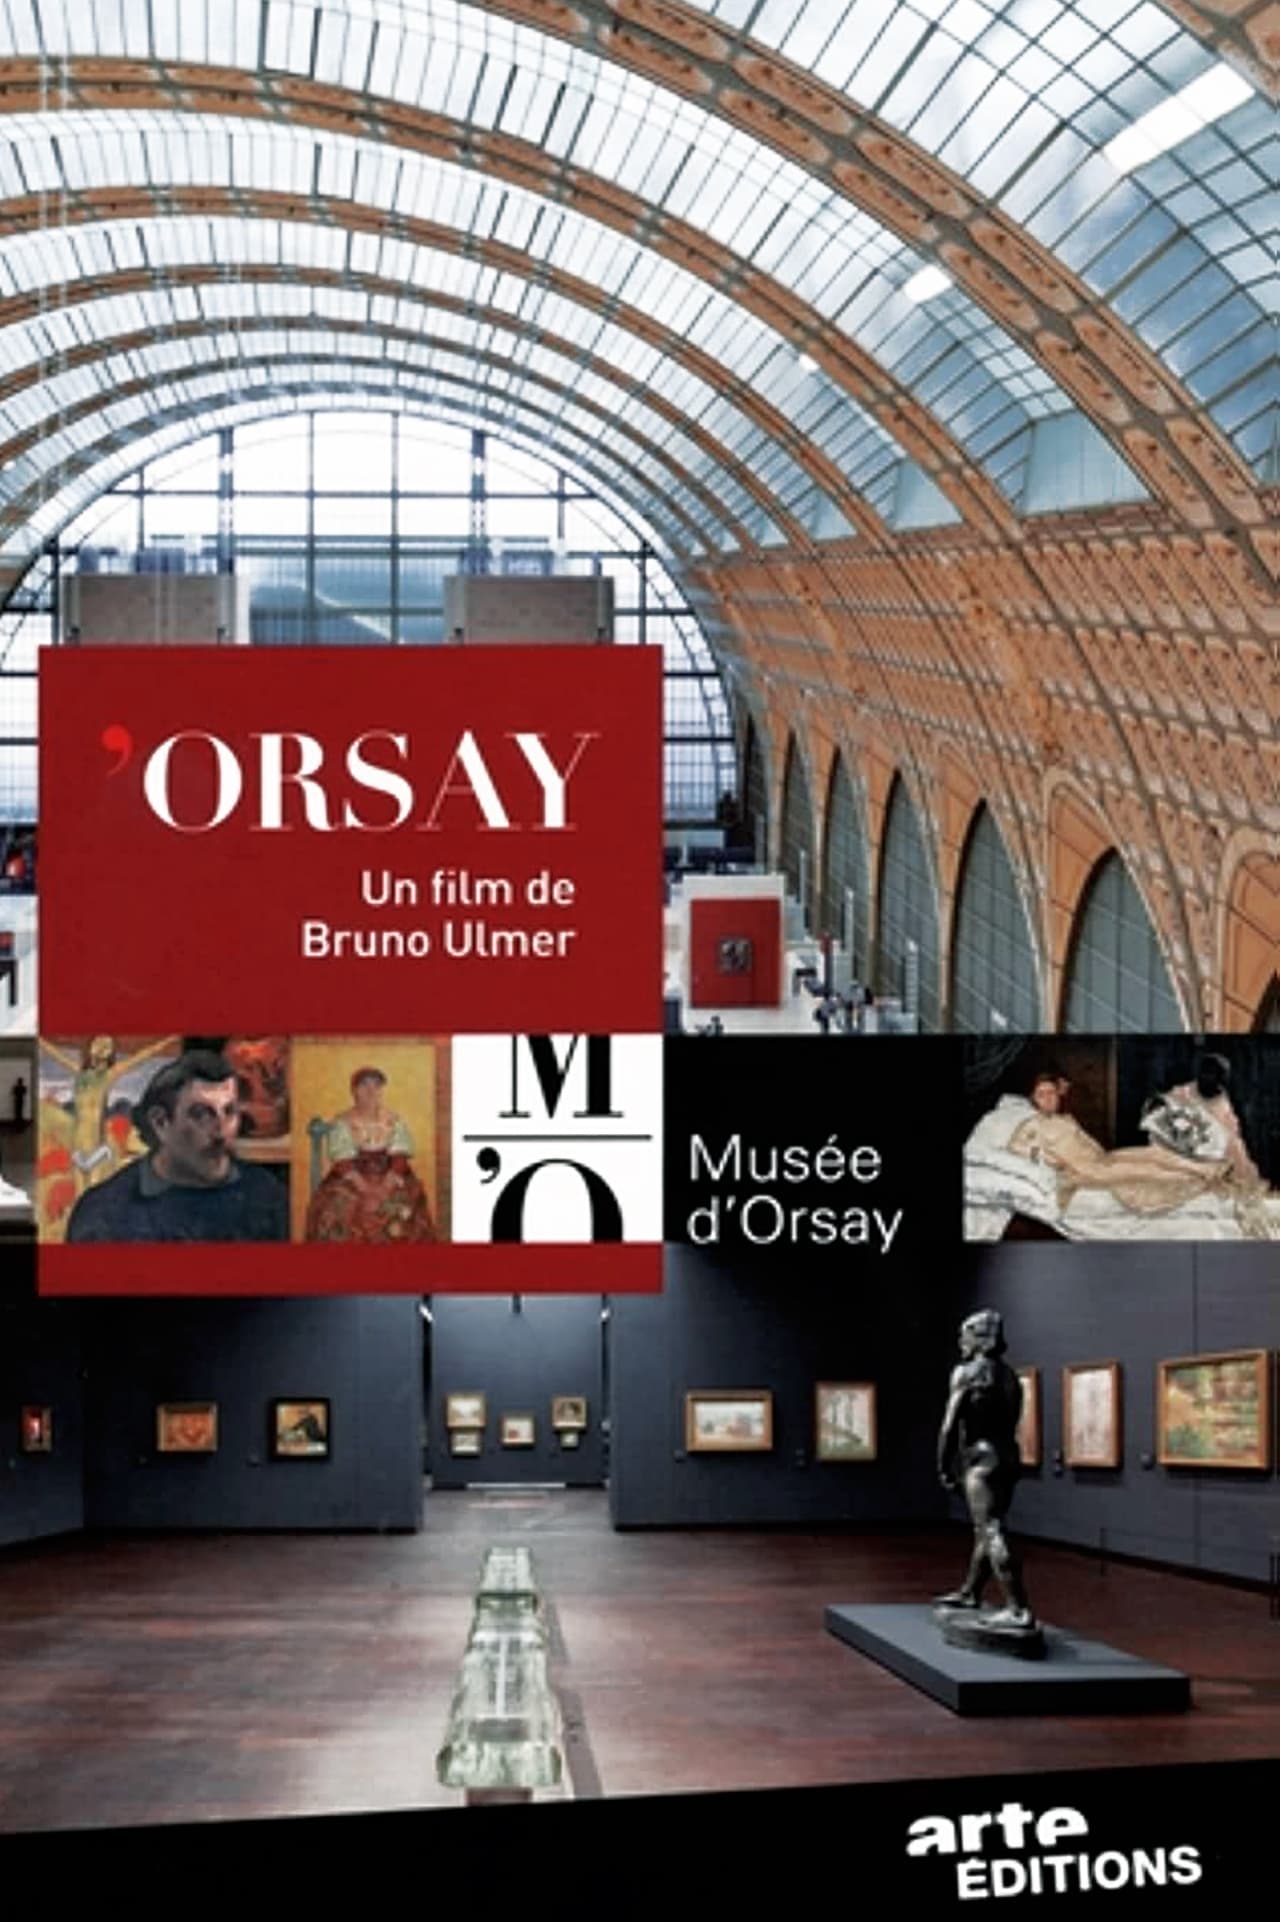 'Orsay